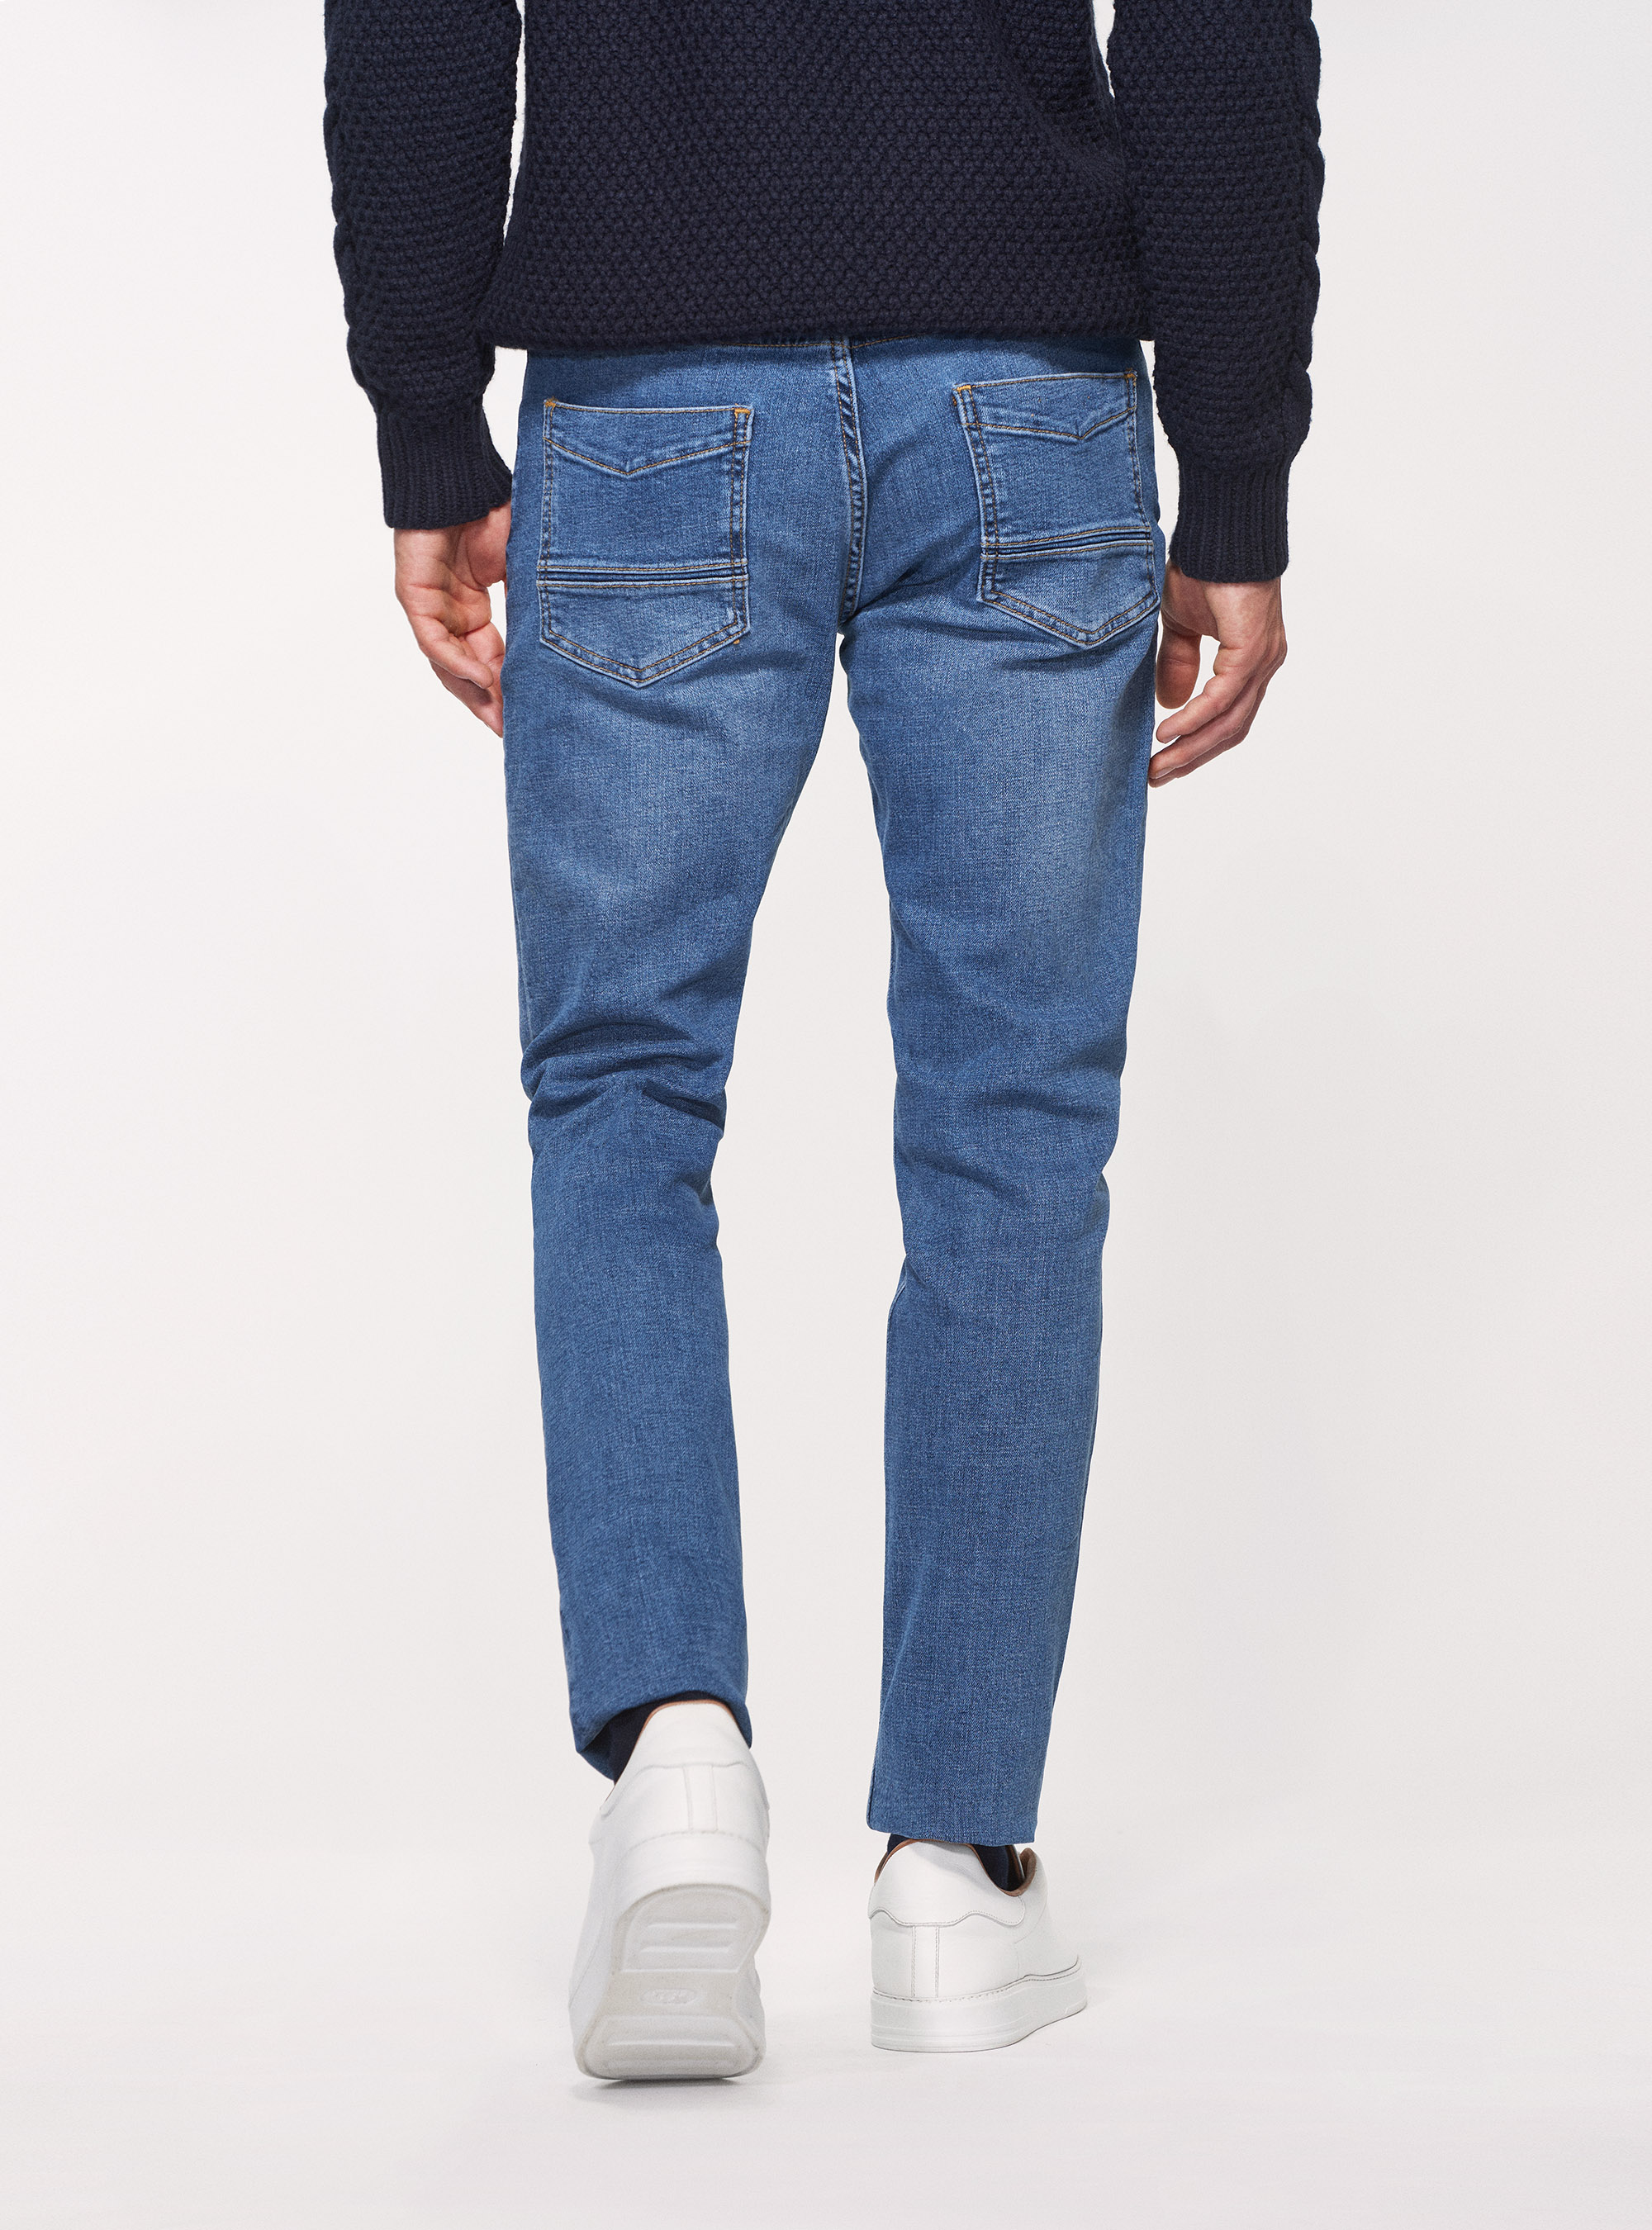 Regular fit washed jeans | GutteridgeUS | Jeans Uomo